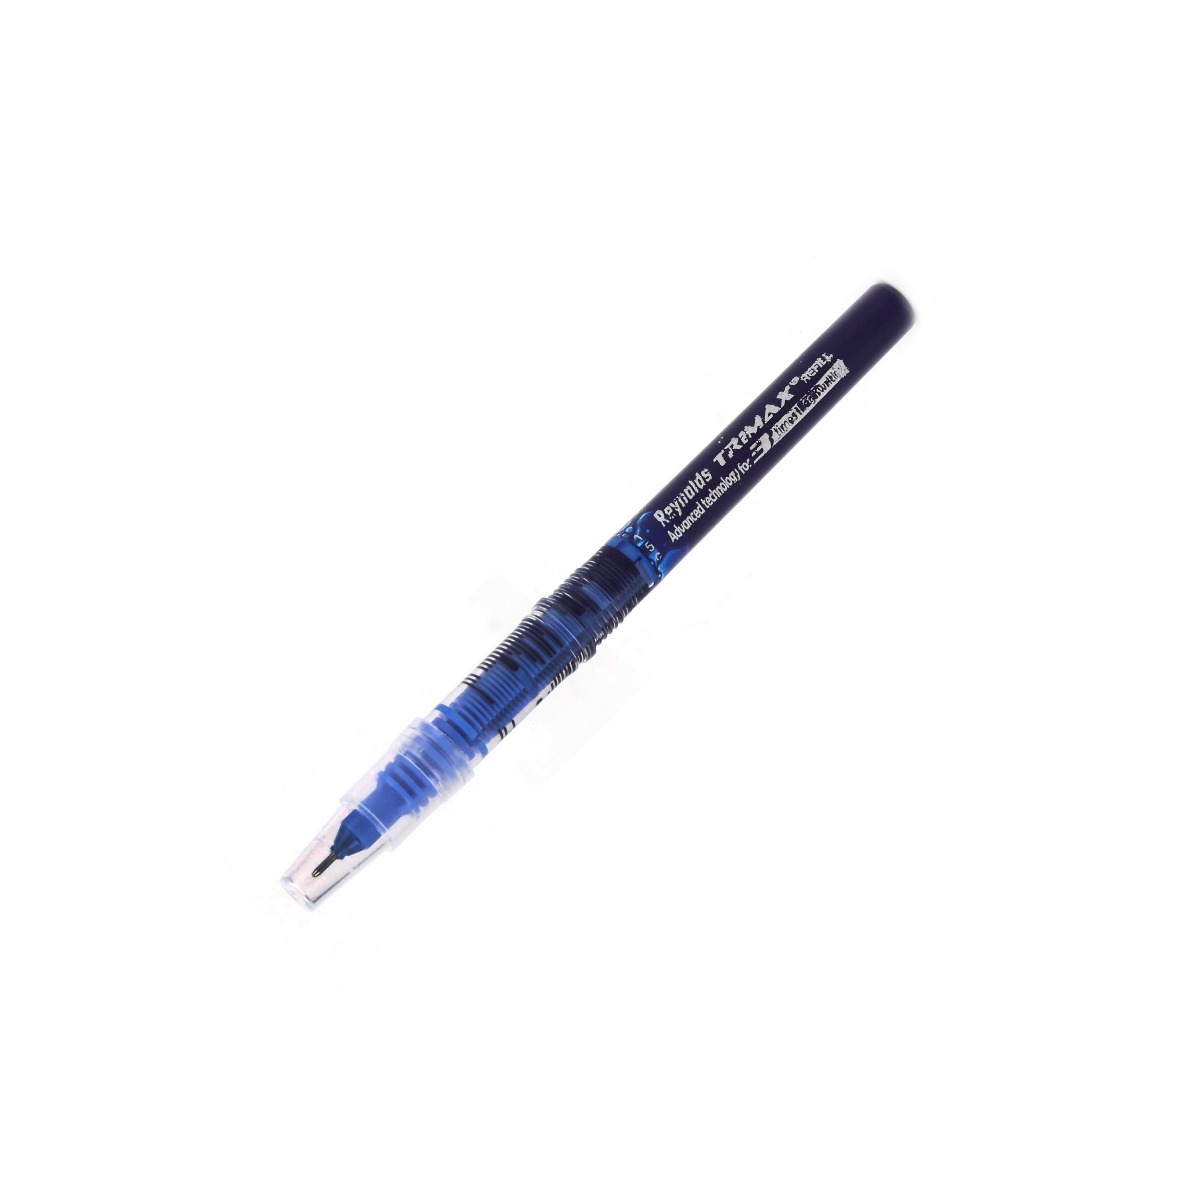 Reynolds Model ; 10990 Trimax  Blue  Ink Fine Tip  Roller Ball Refill      